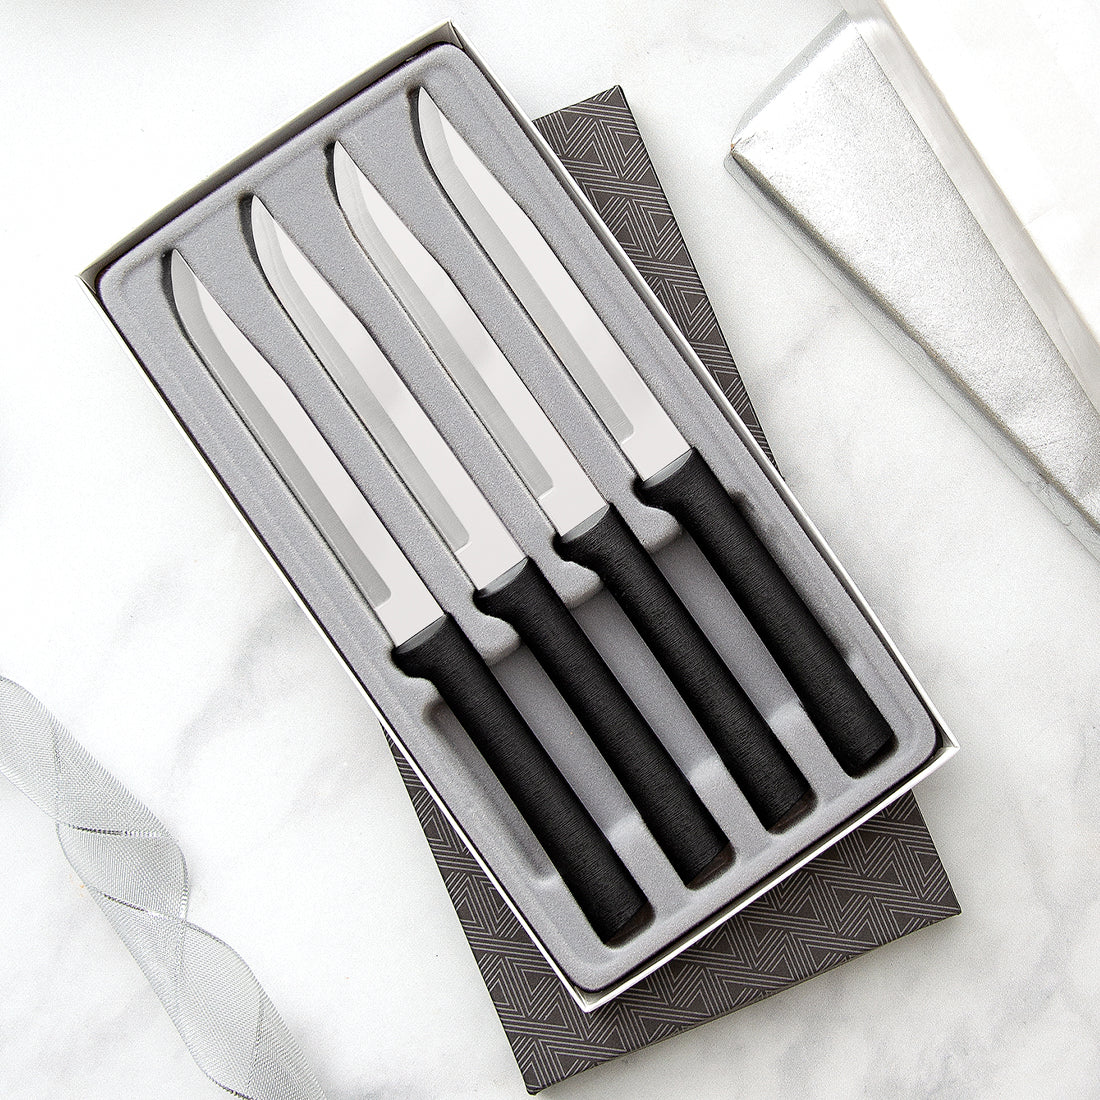 Rada Cutlery 4-Piece Kitchen Utensil Gift Set Stainless Steel Set with Black